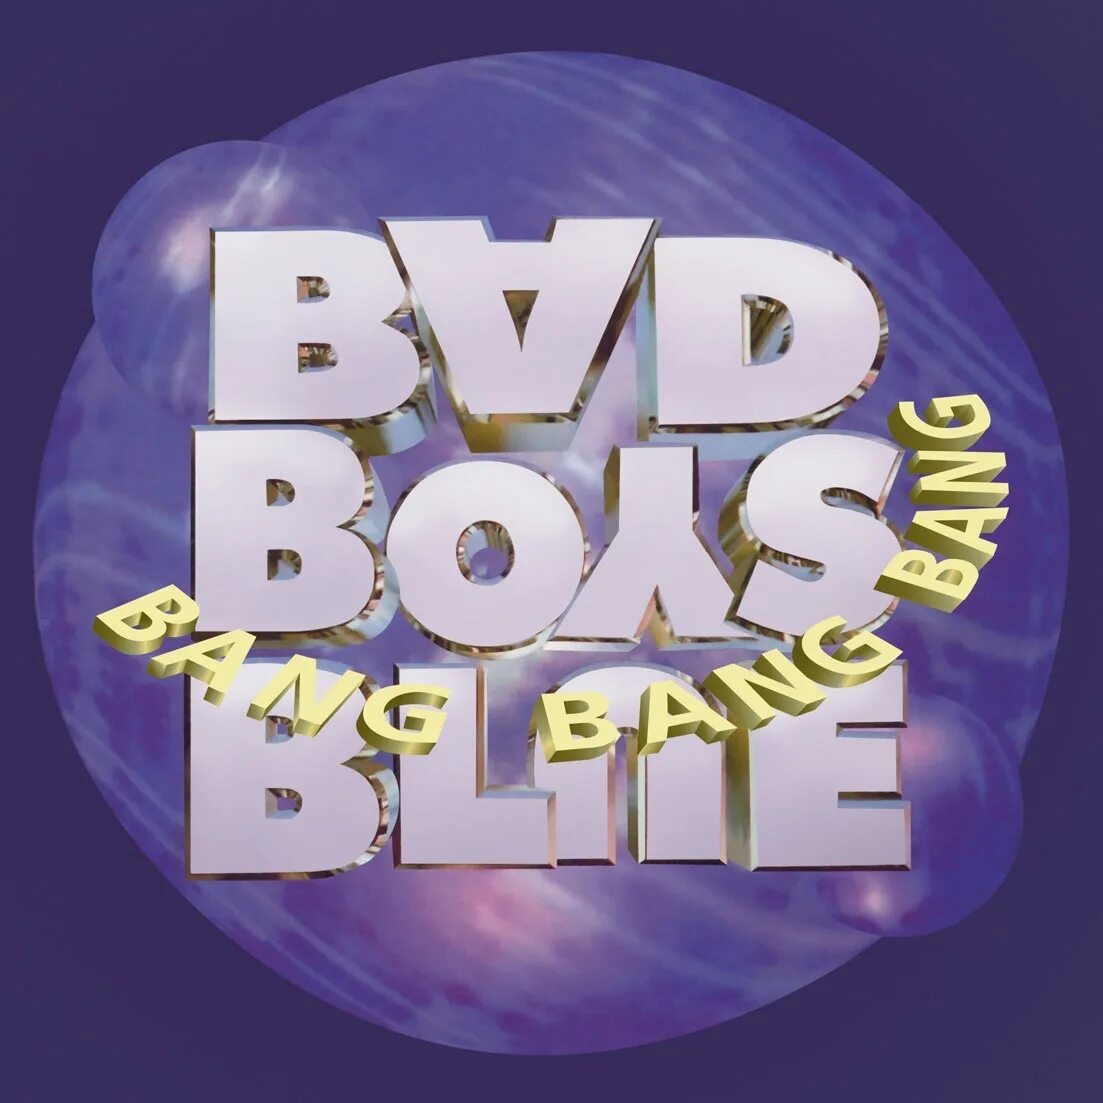 Bang blues. Bad boys Blue 1996. Bad boys Blue Bang. Обложка альбома Bang. Bad boys Blue Bang Bang Bang обложки альбомов.